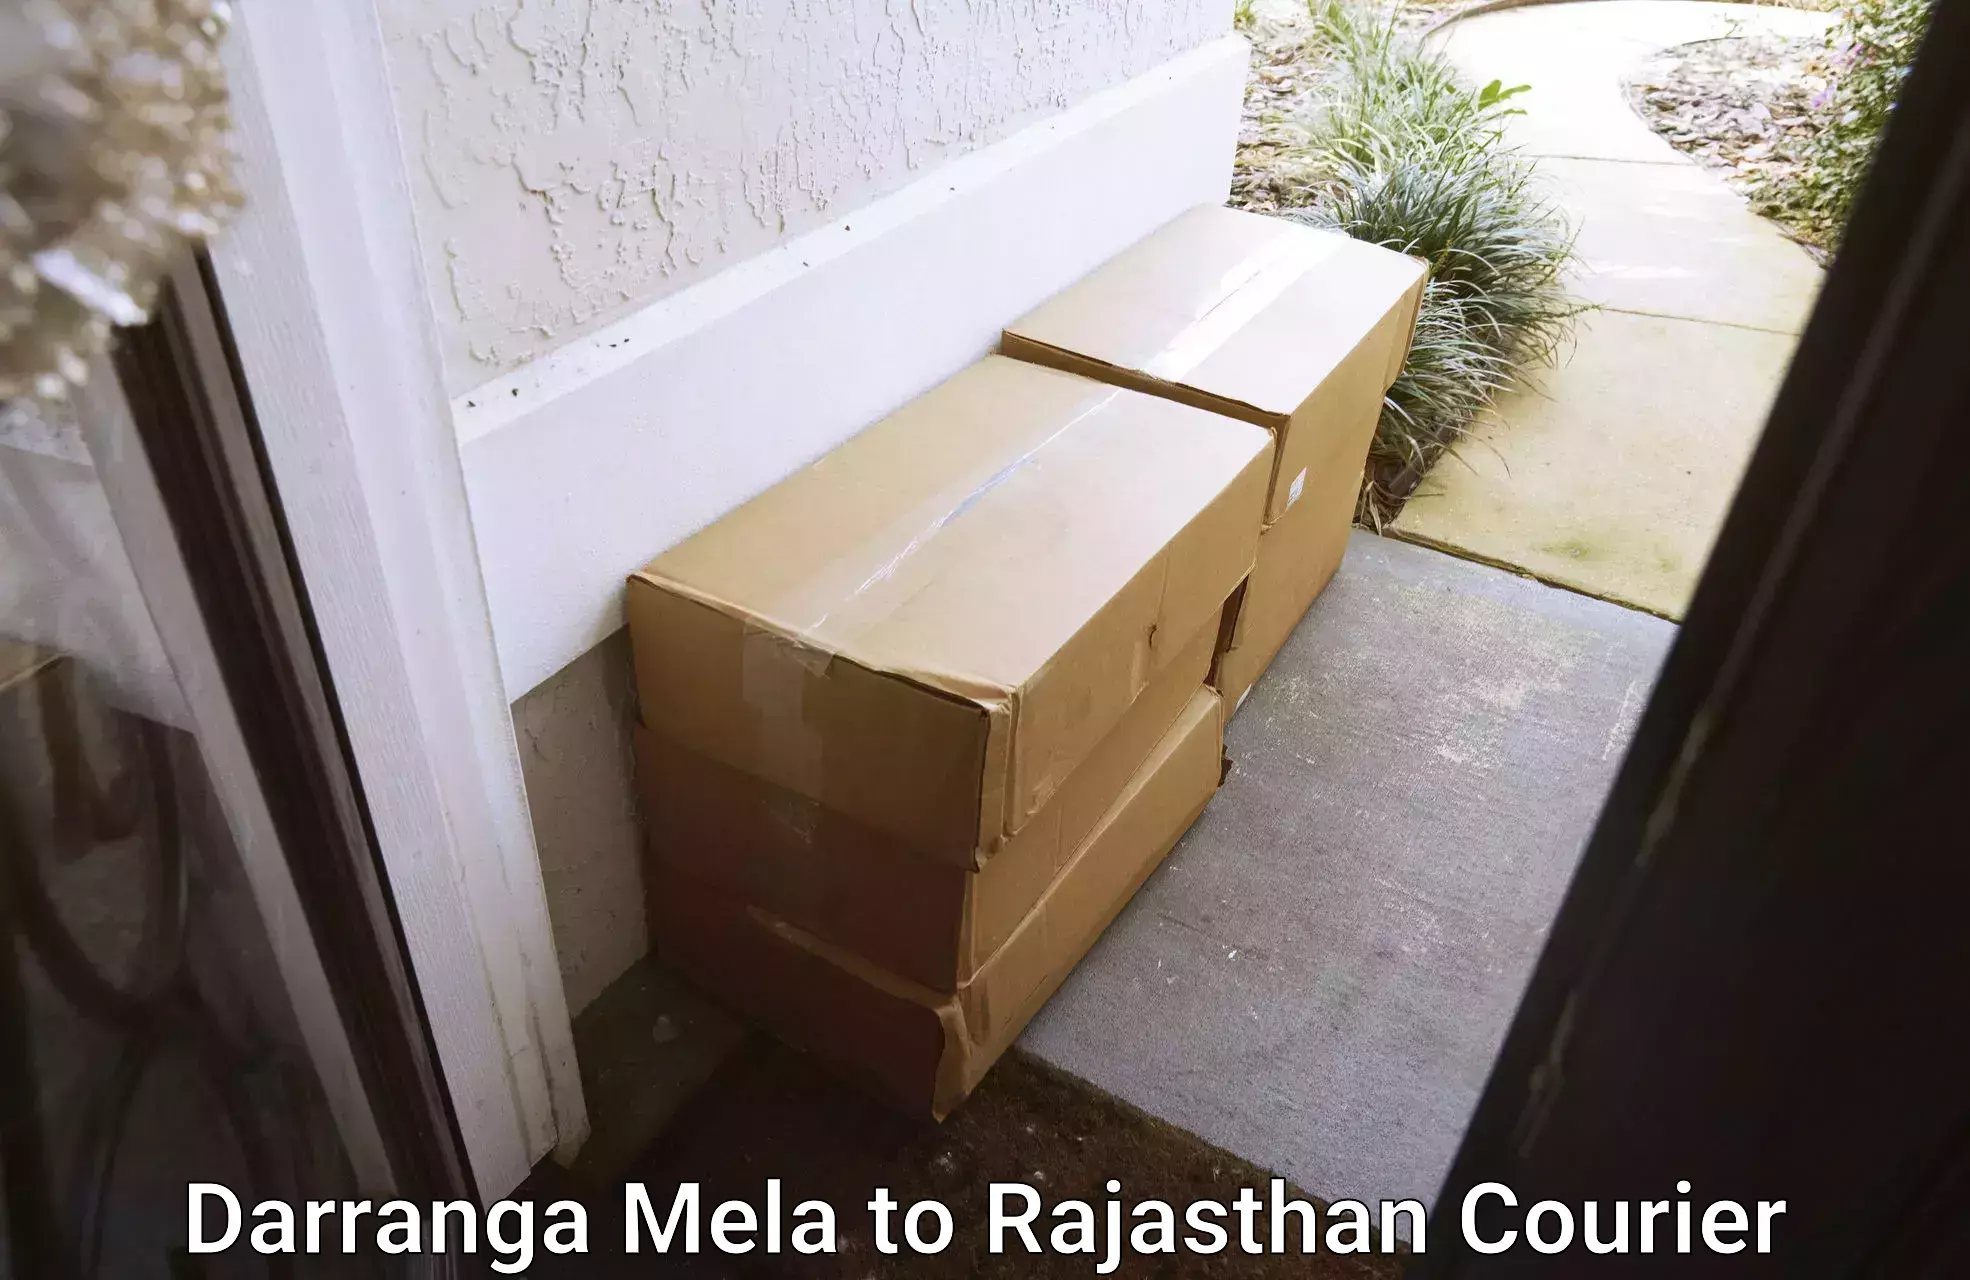 Delivery service partnership Darranga Mela to Sangaria